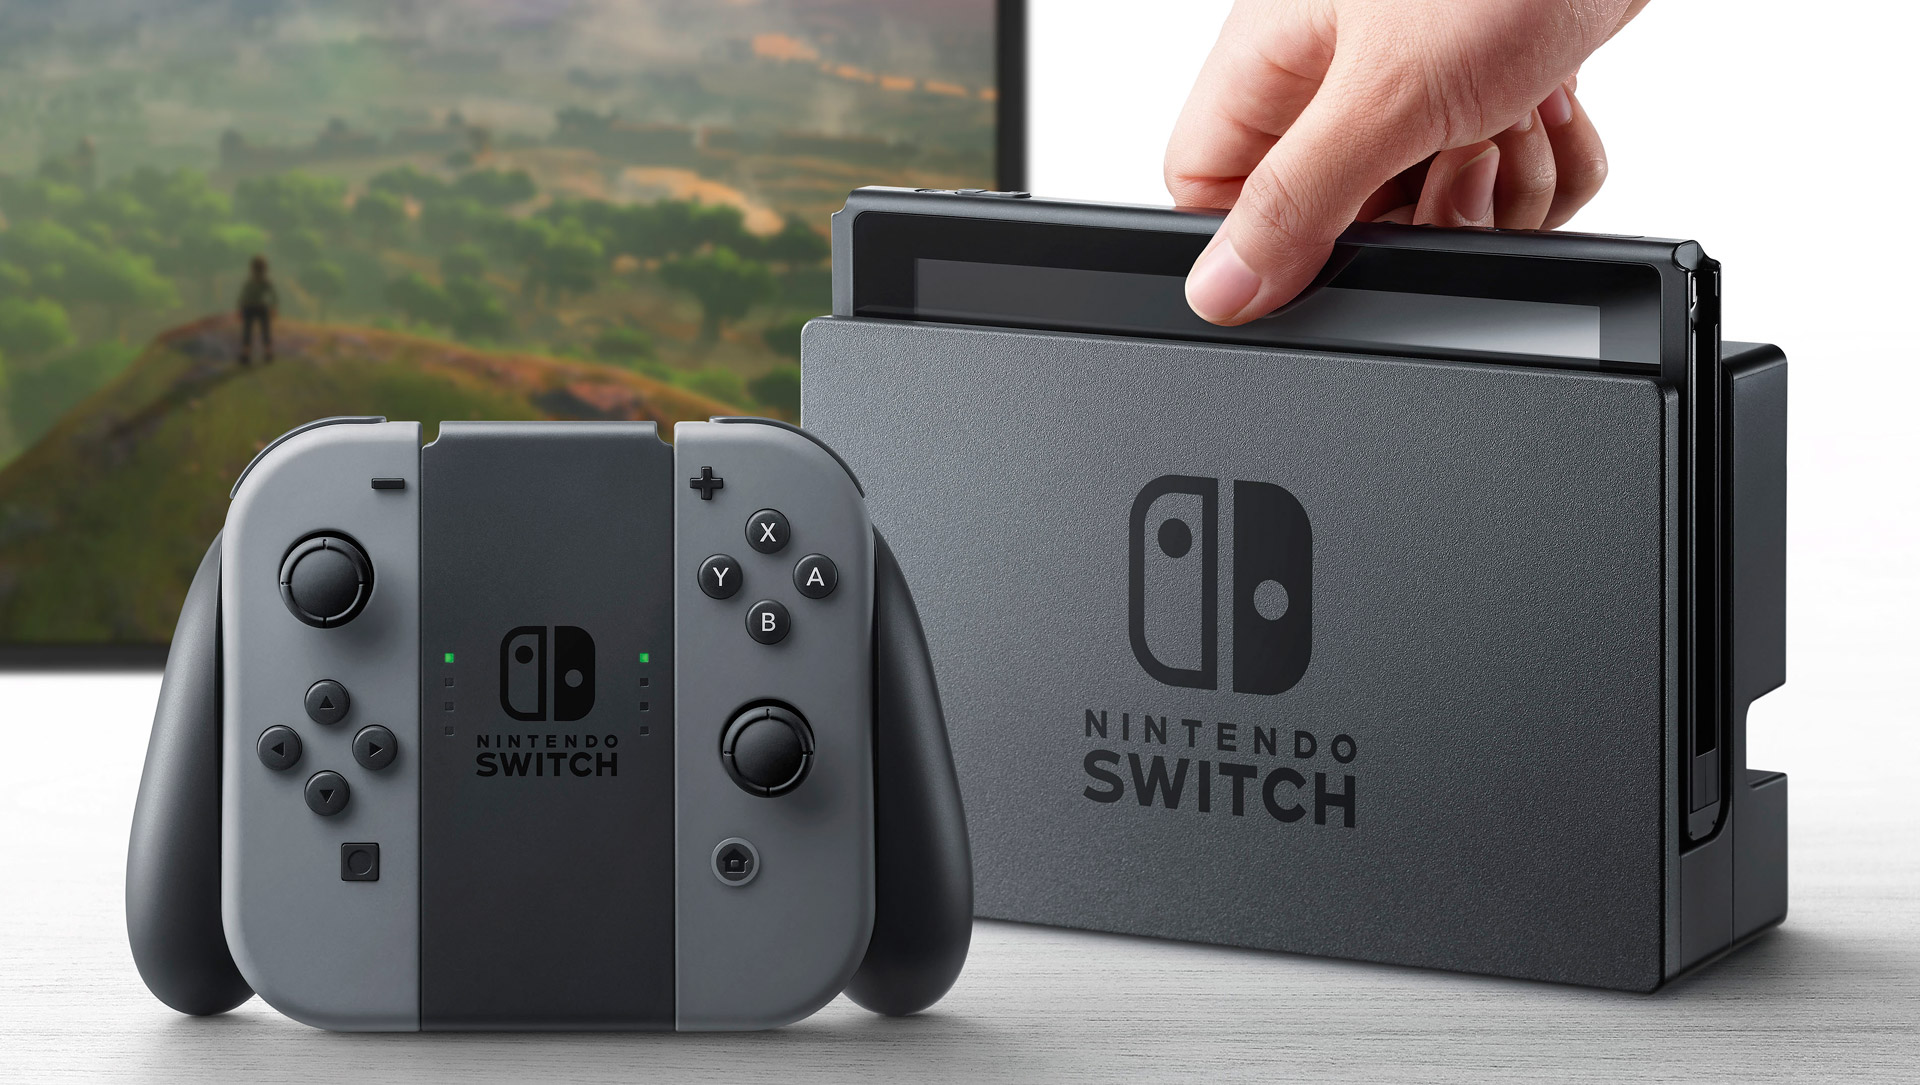 Nintendo Switch, o Imbatível!